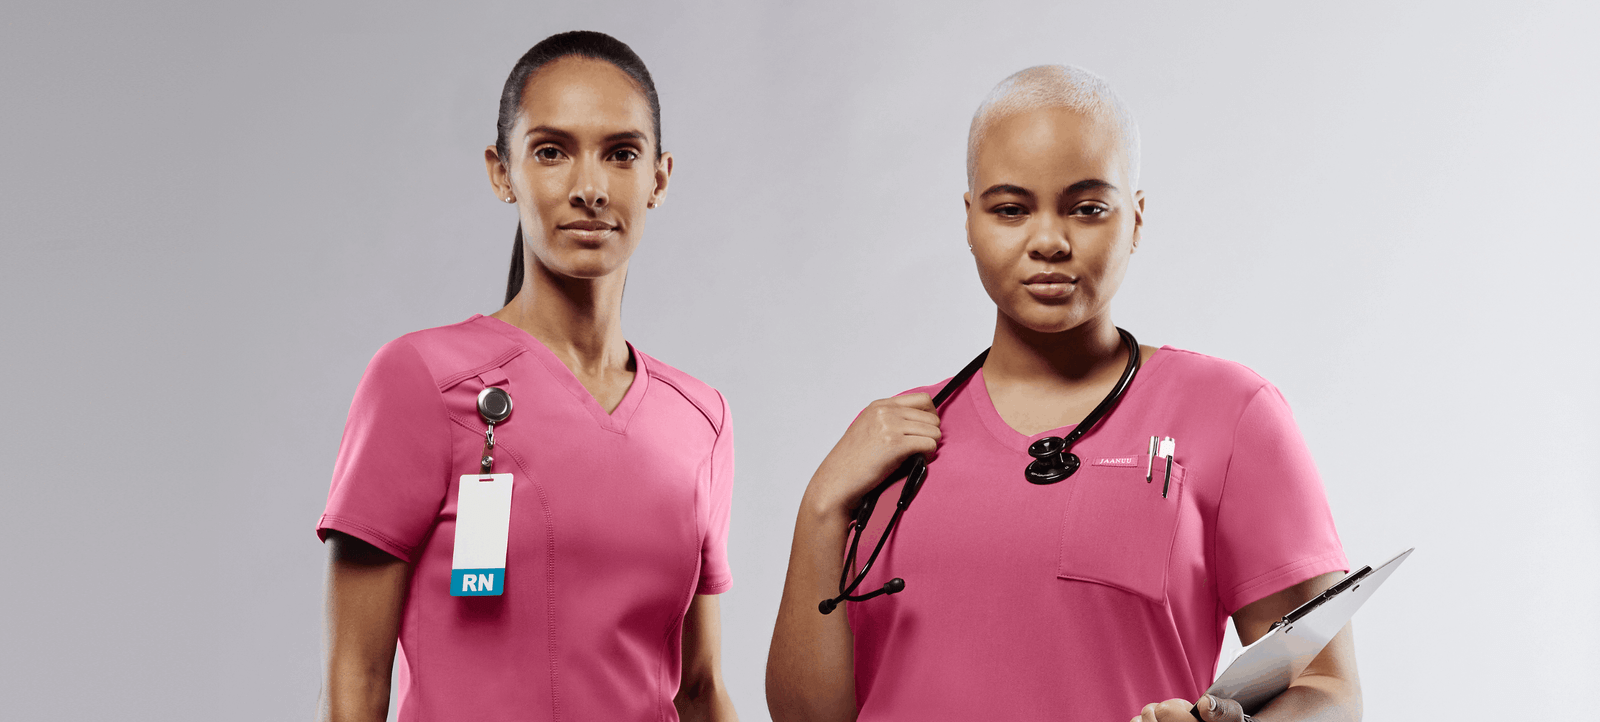 Nurse Practitioner Jobs In Toronto With Good Salaries